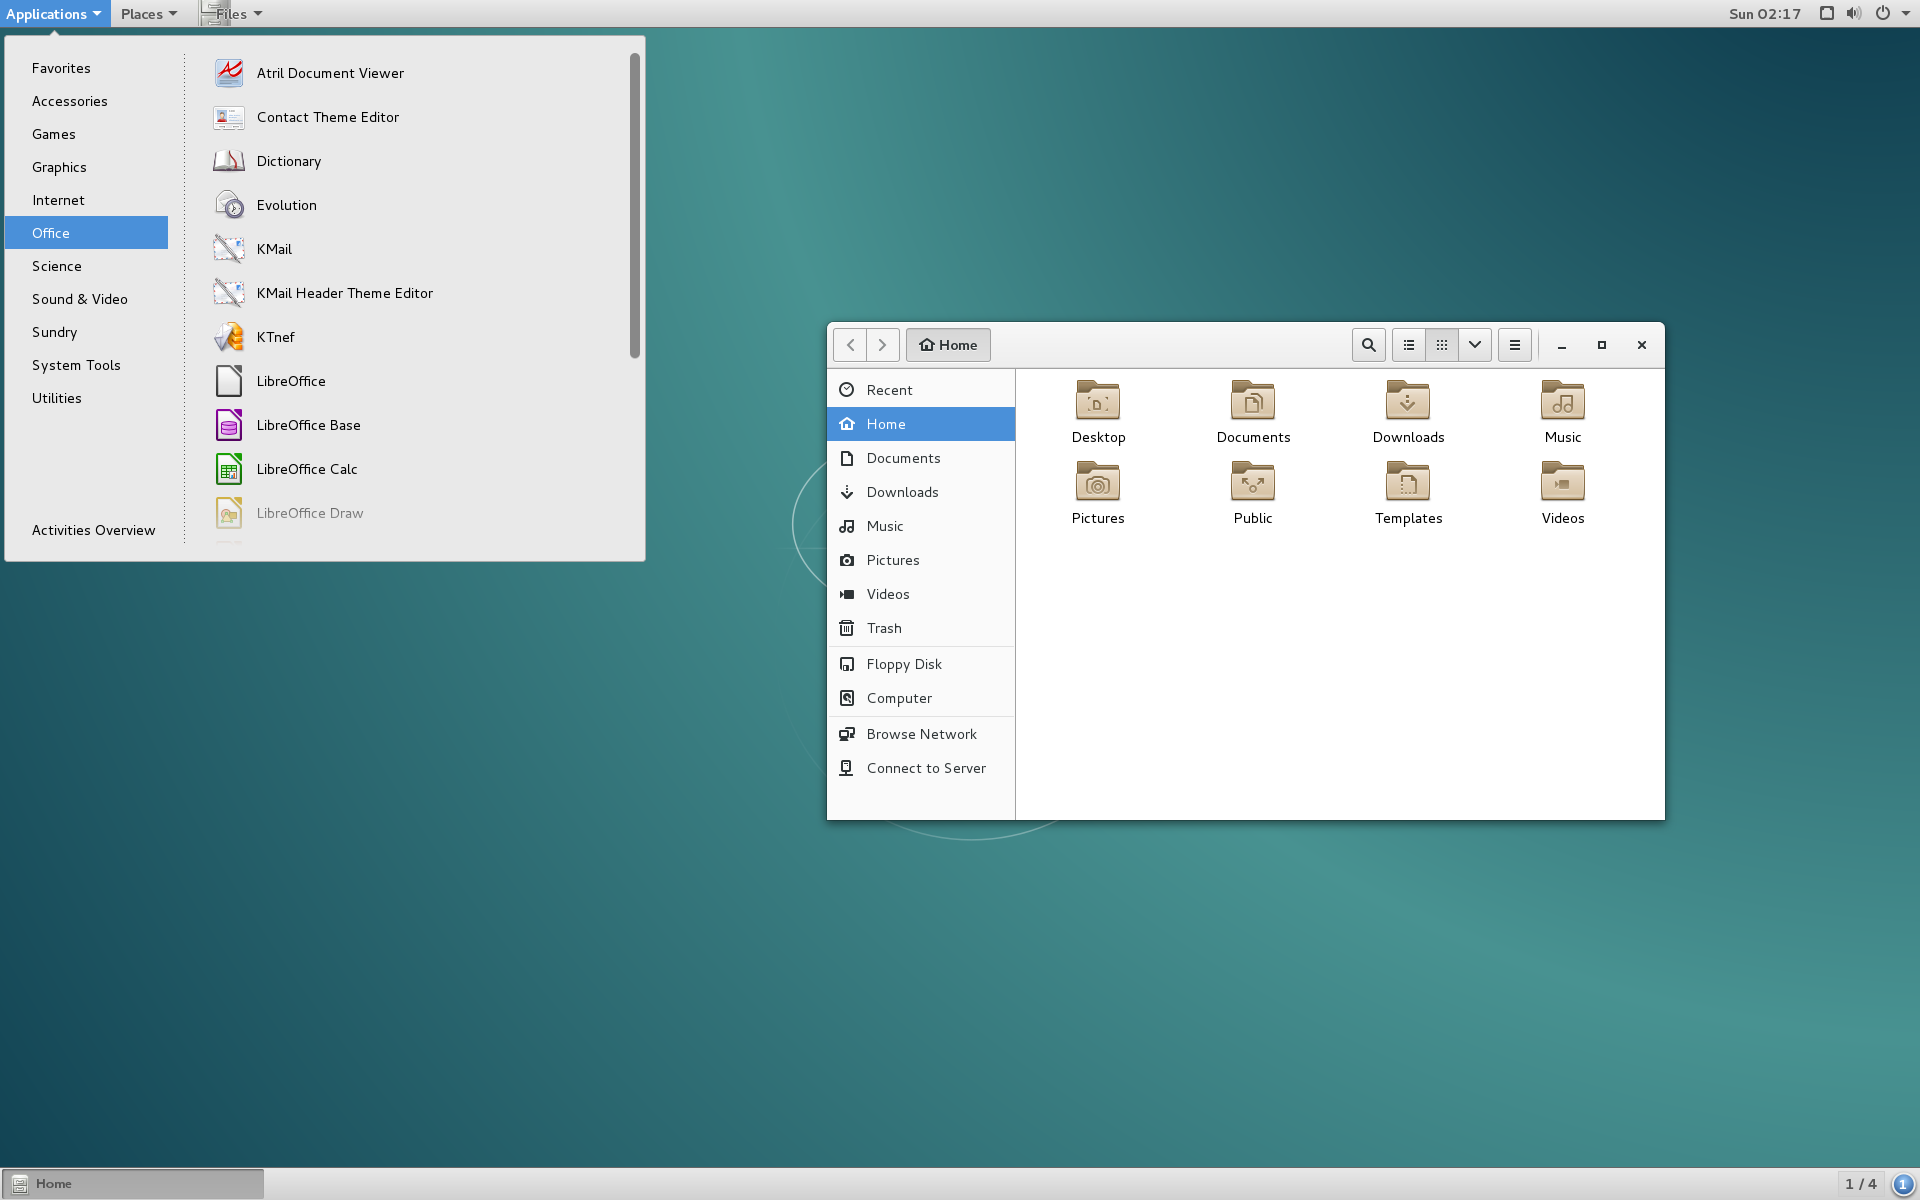 Debian8 with Gnome classic desktop